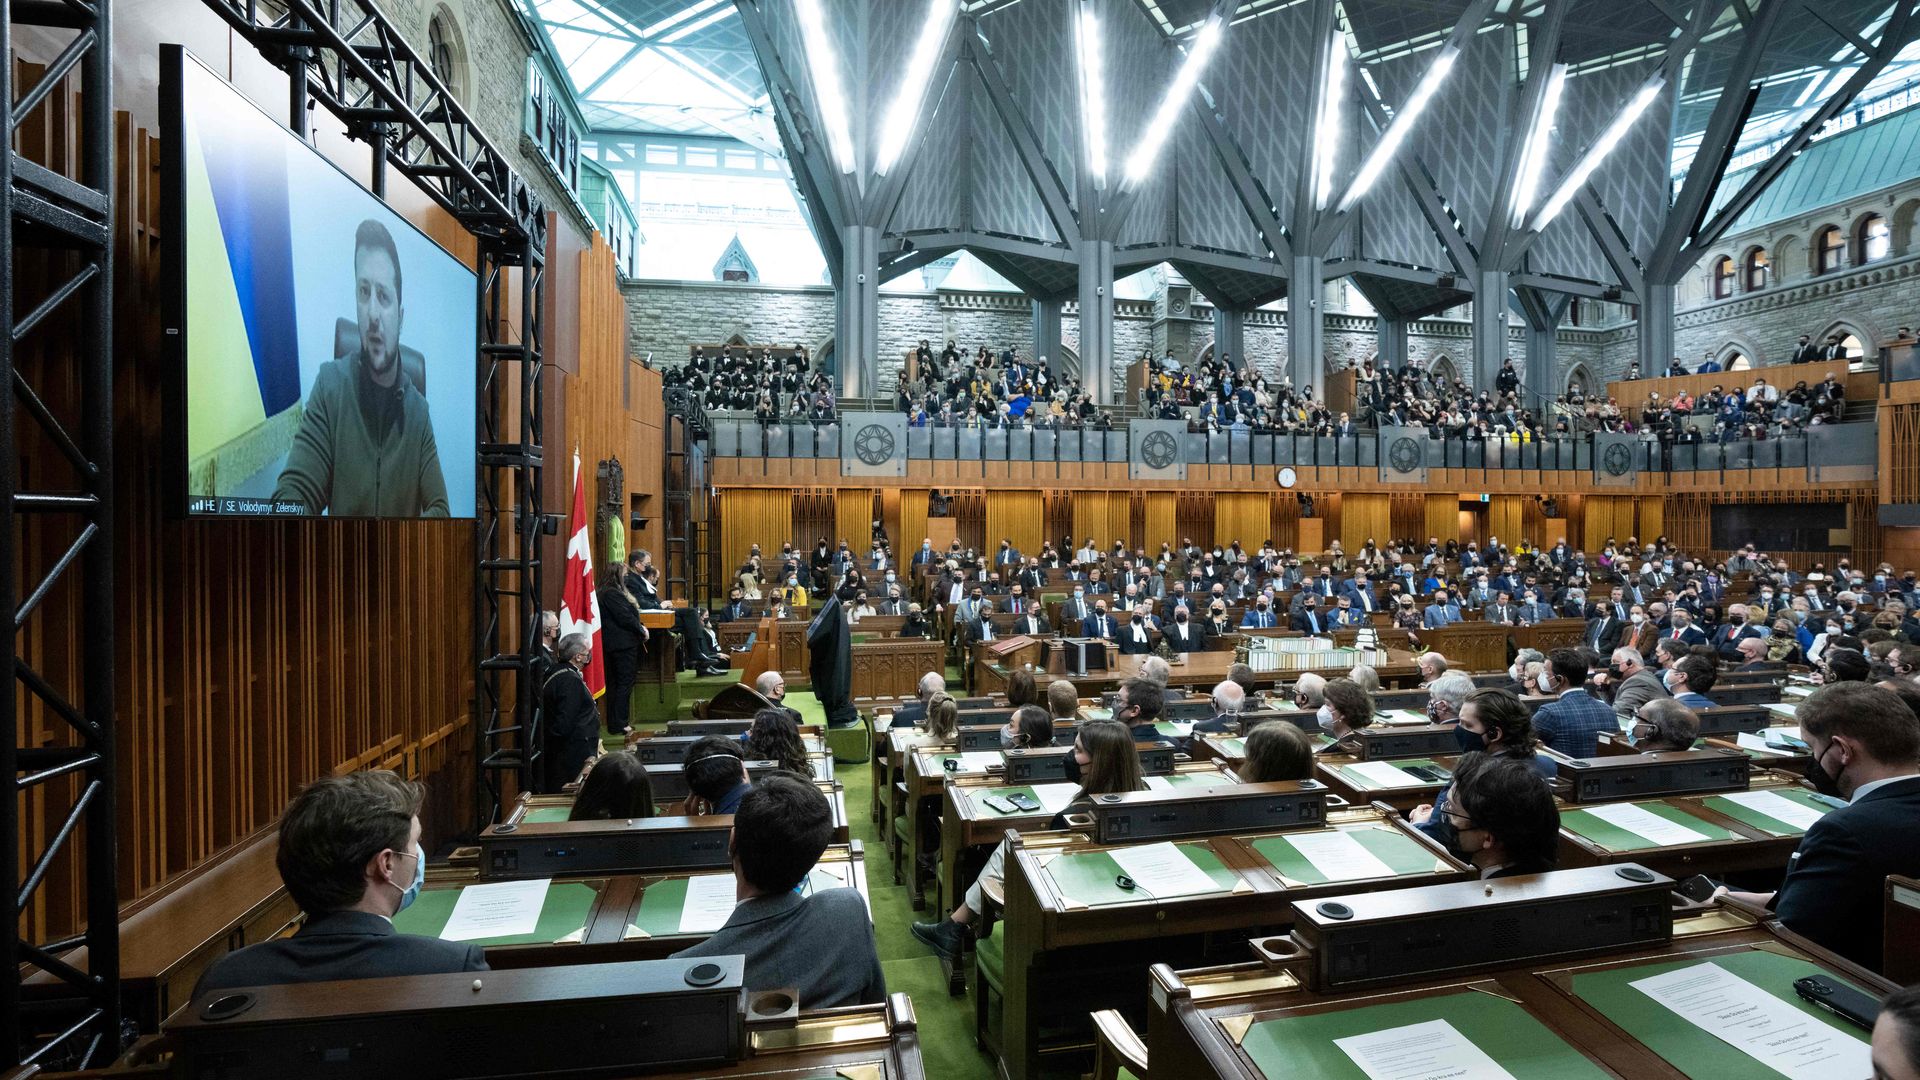 Ukrainian President Zelensky is seen addressing the Canadian Parliament.